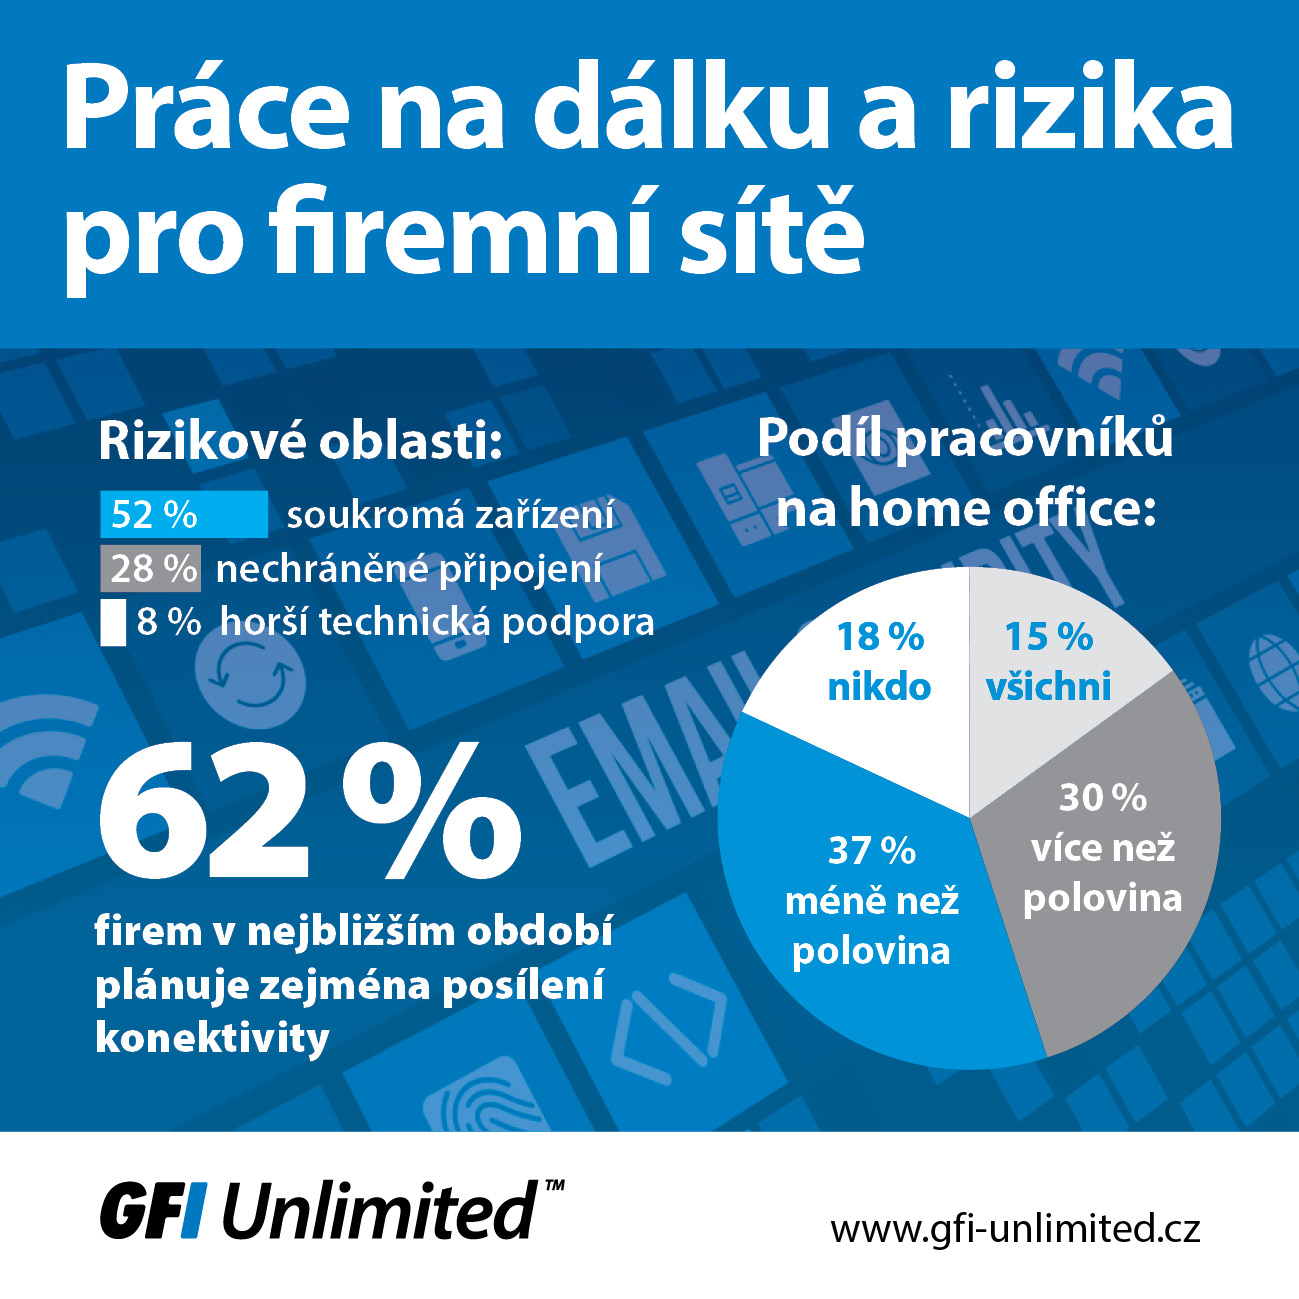 czech-companies-strengthen-connectivity-security-home-office